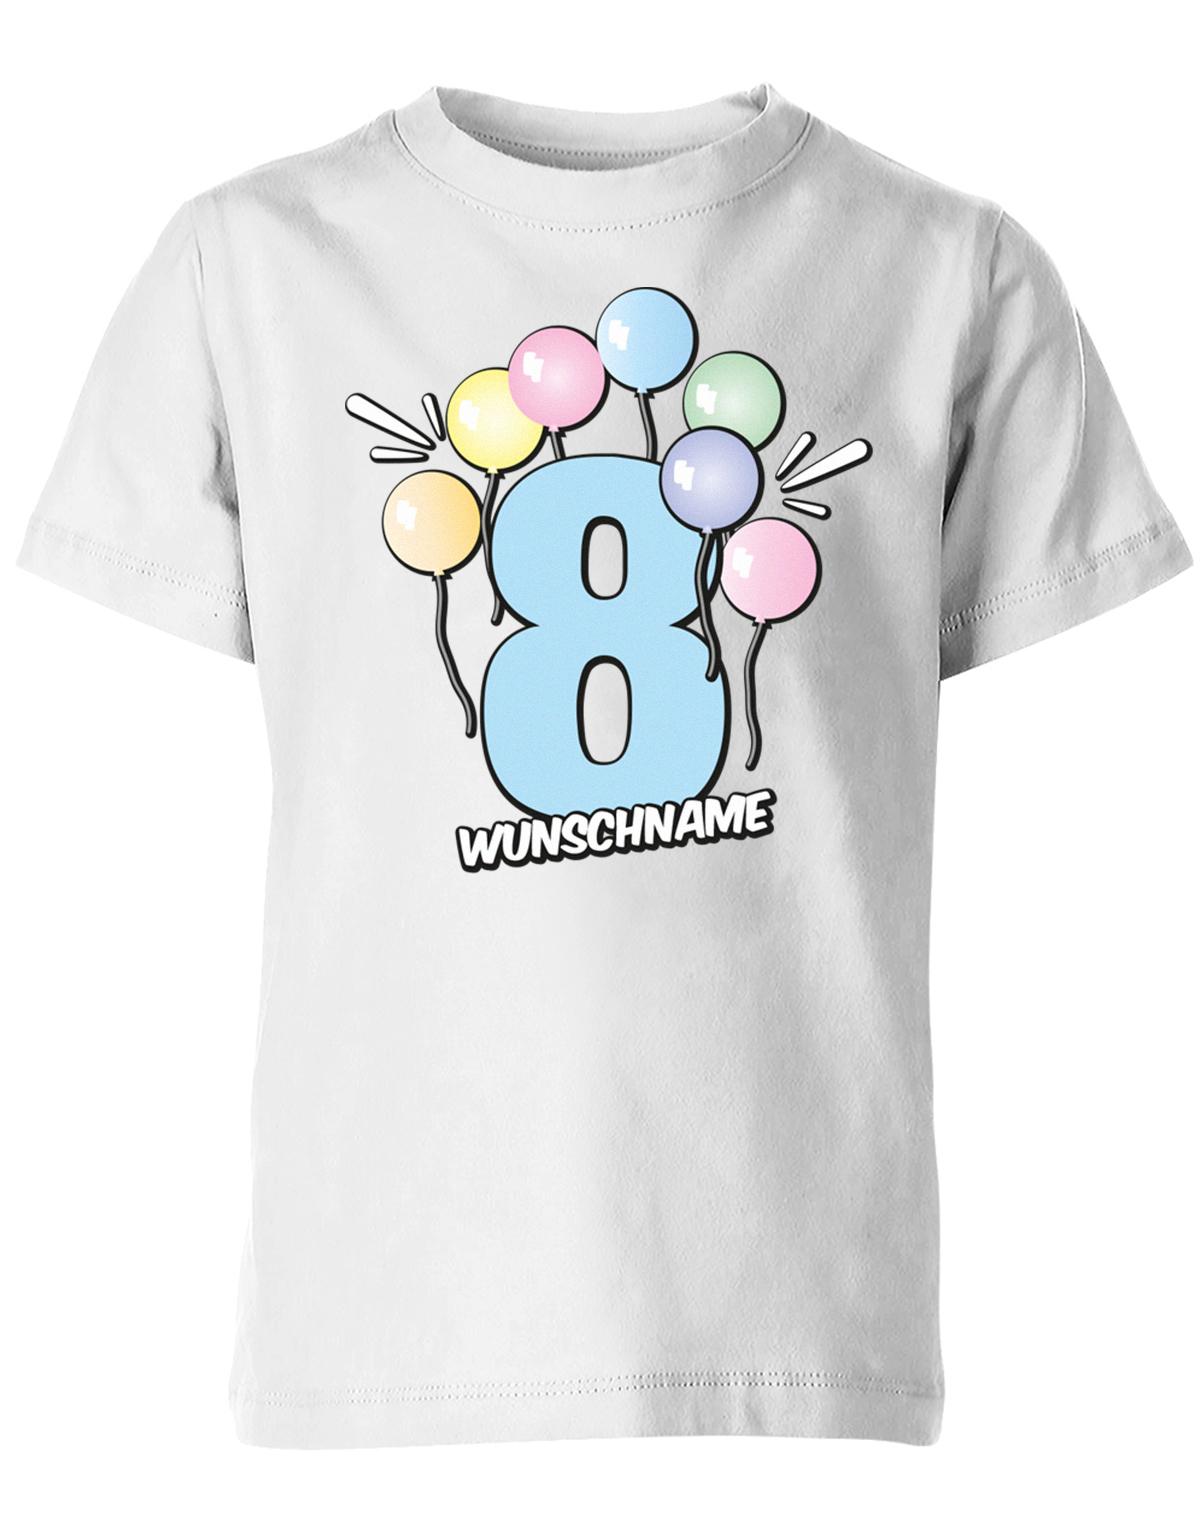 Luftballons-pastell-8-geburtstag-wunschname-kinder-shirt-weiss